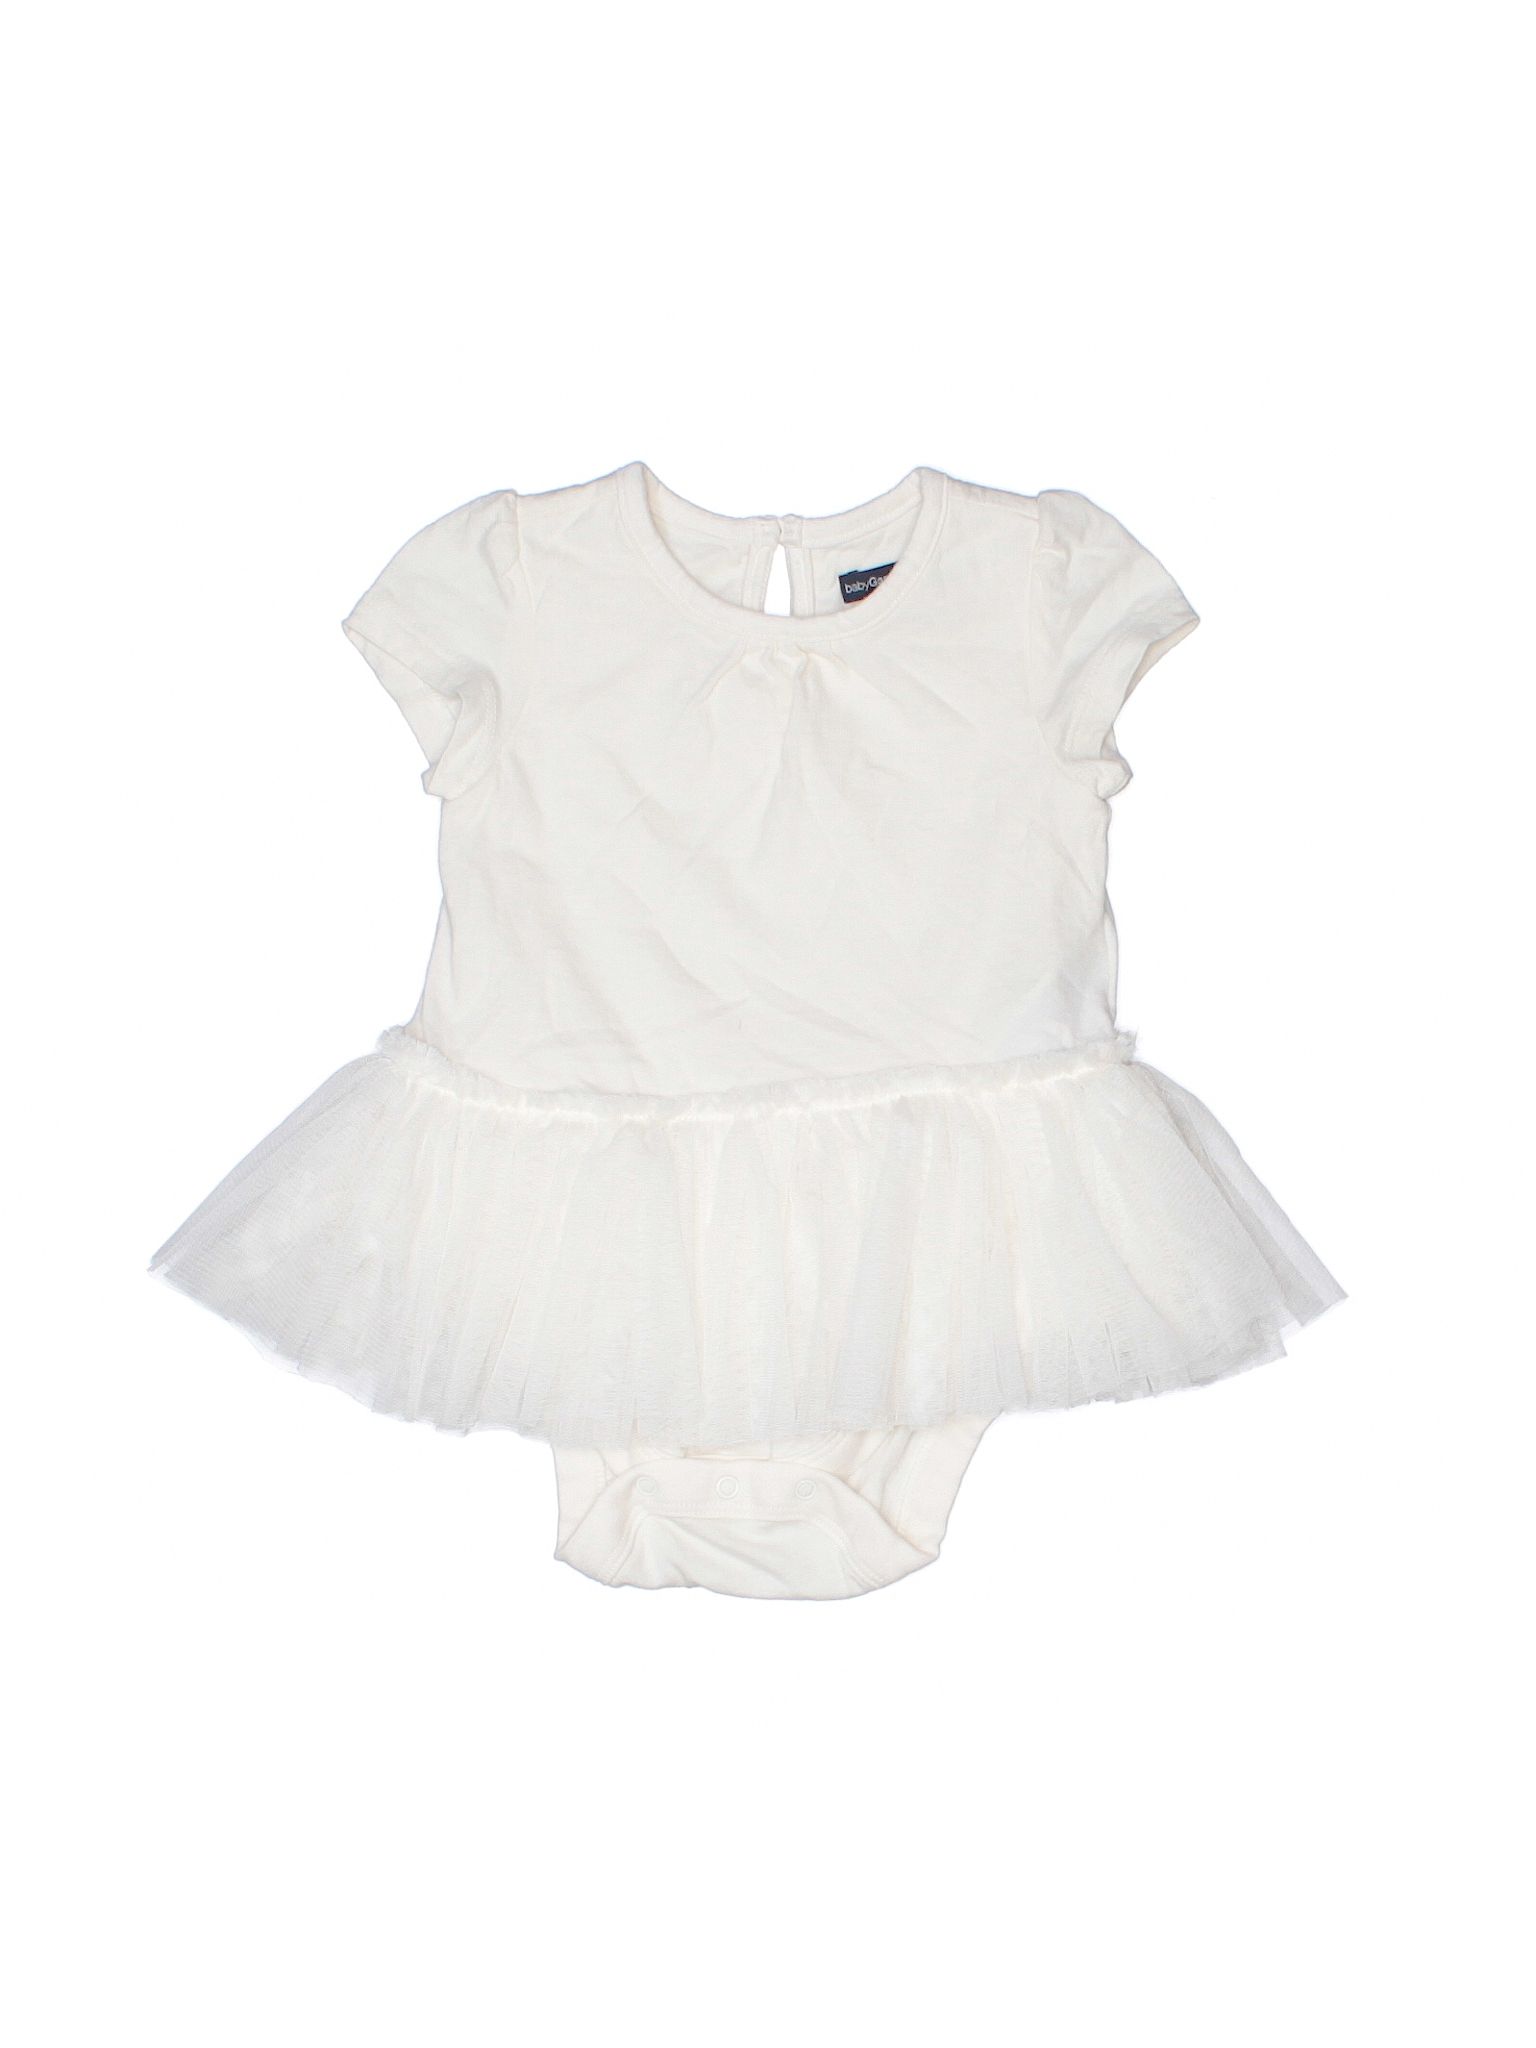 Baby Gap Dress Size 6 mo: White Girls Skirts & Dresses - 25736205 | thredUP